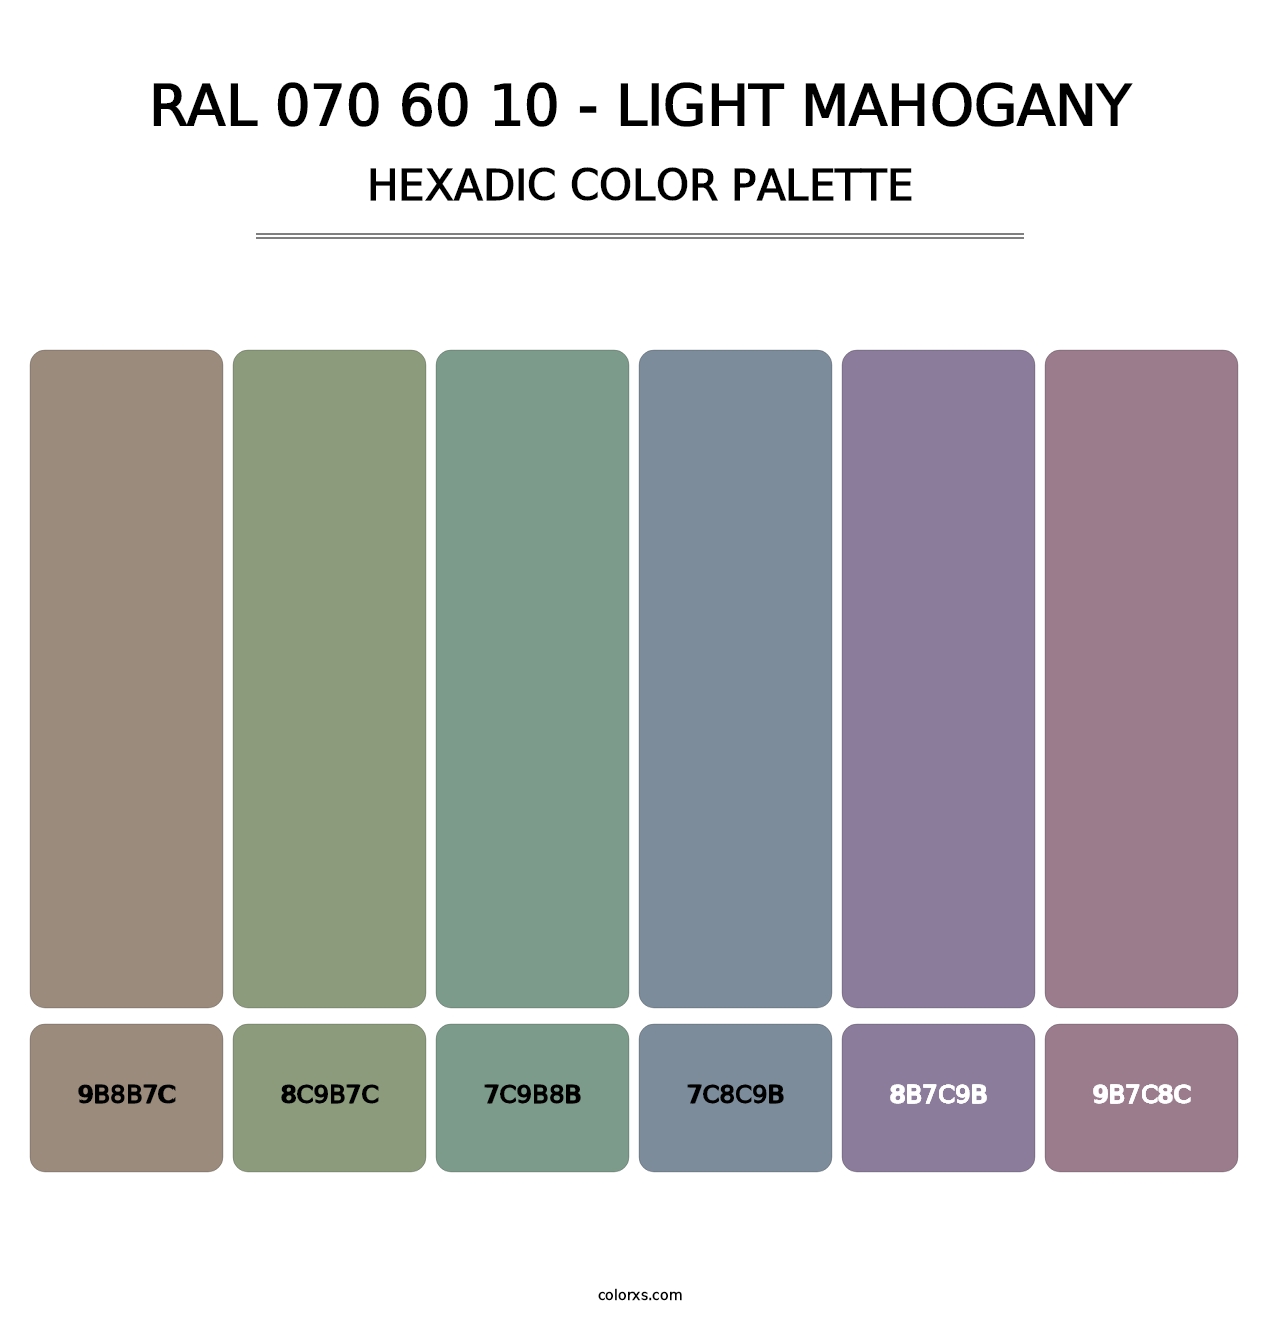 RAL 070 60 10 - Light Mahogany - Hexadic Color Palette